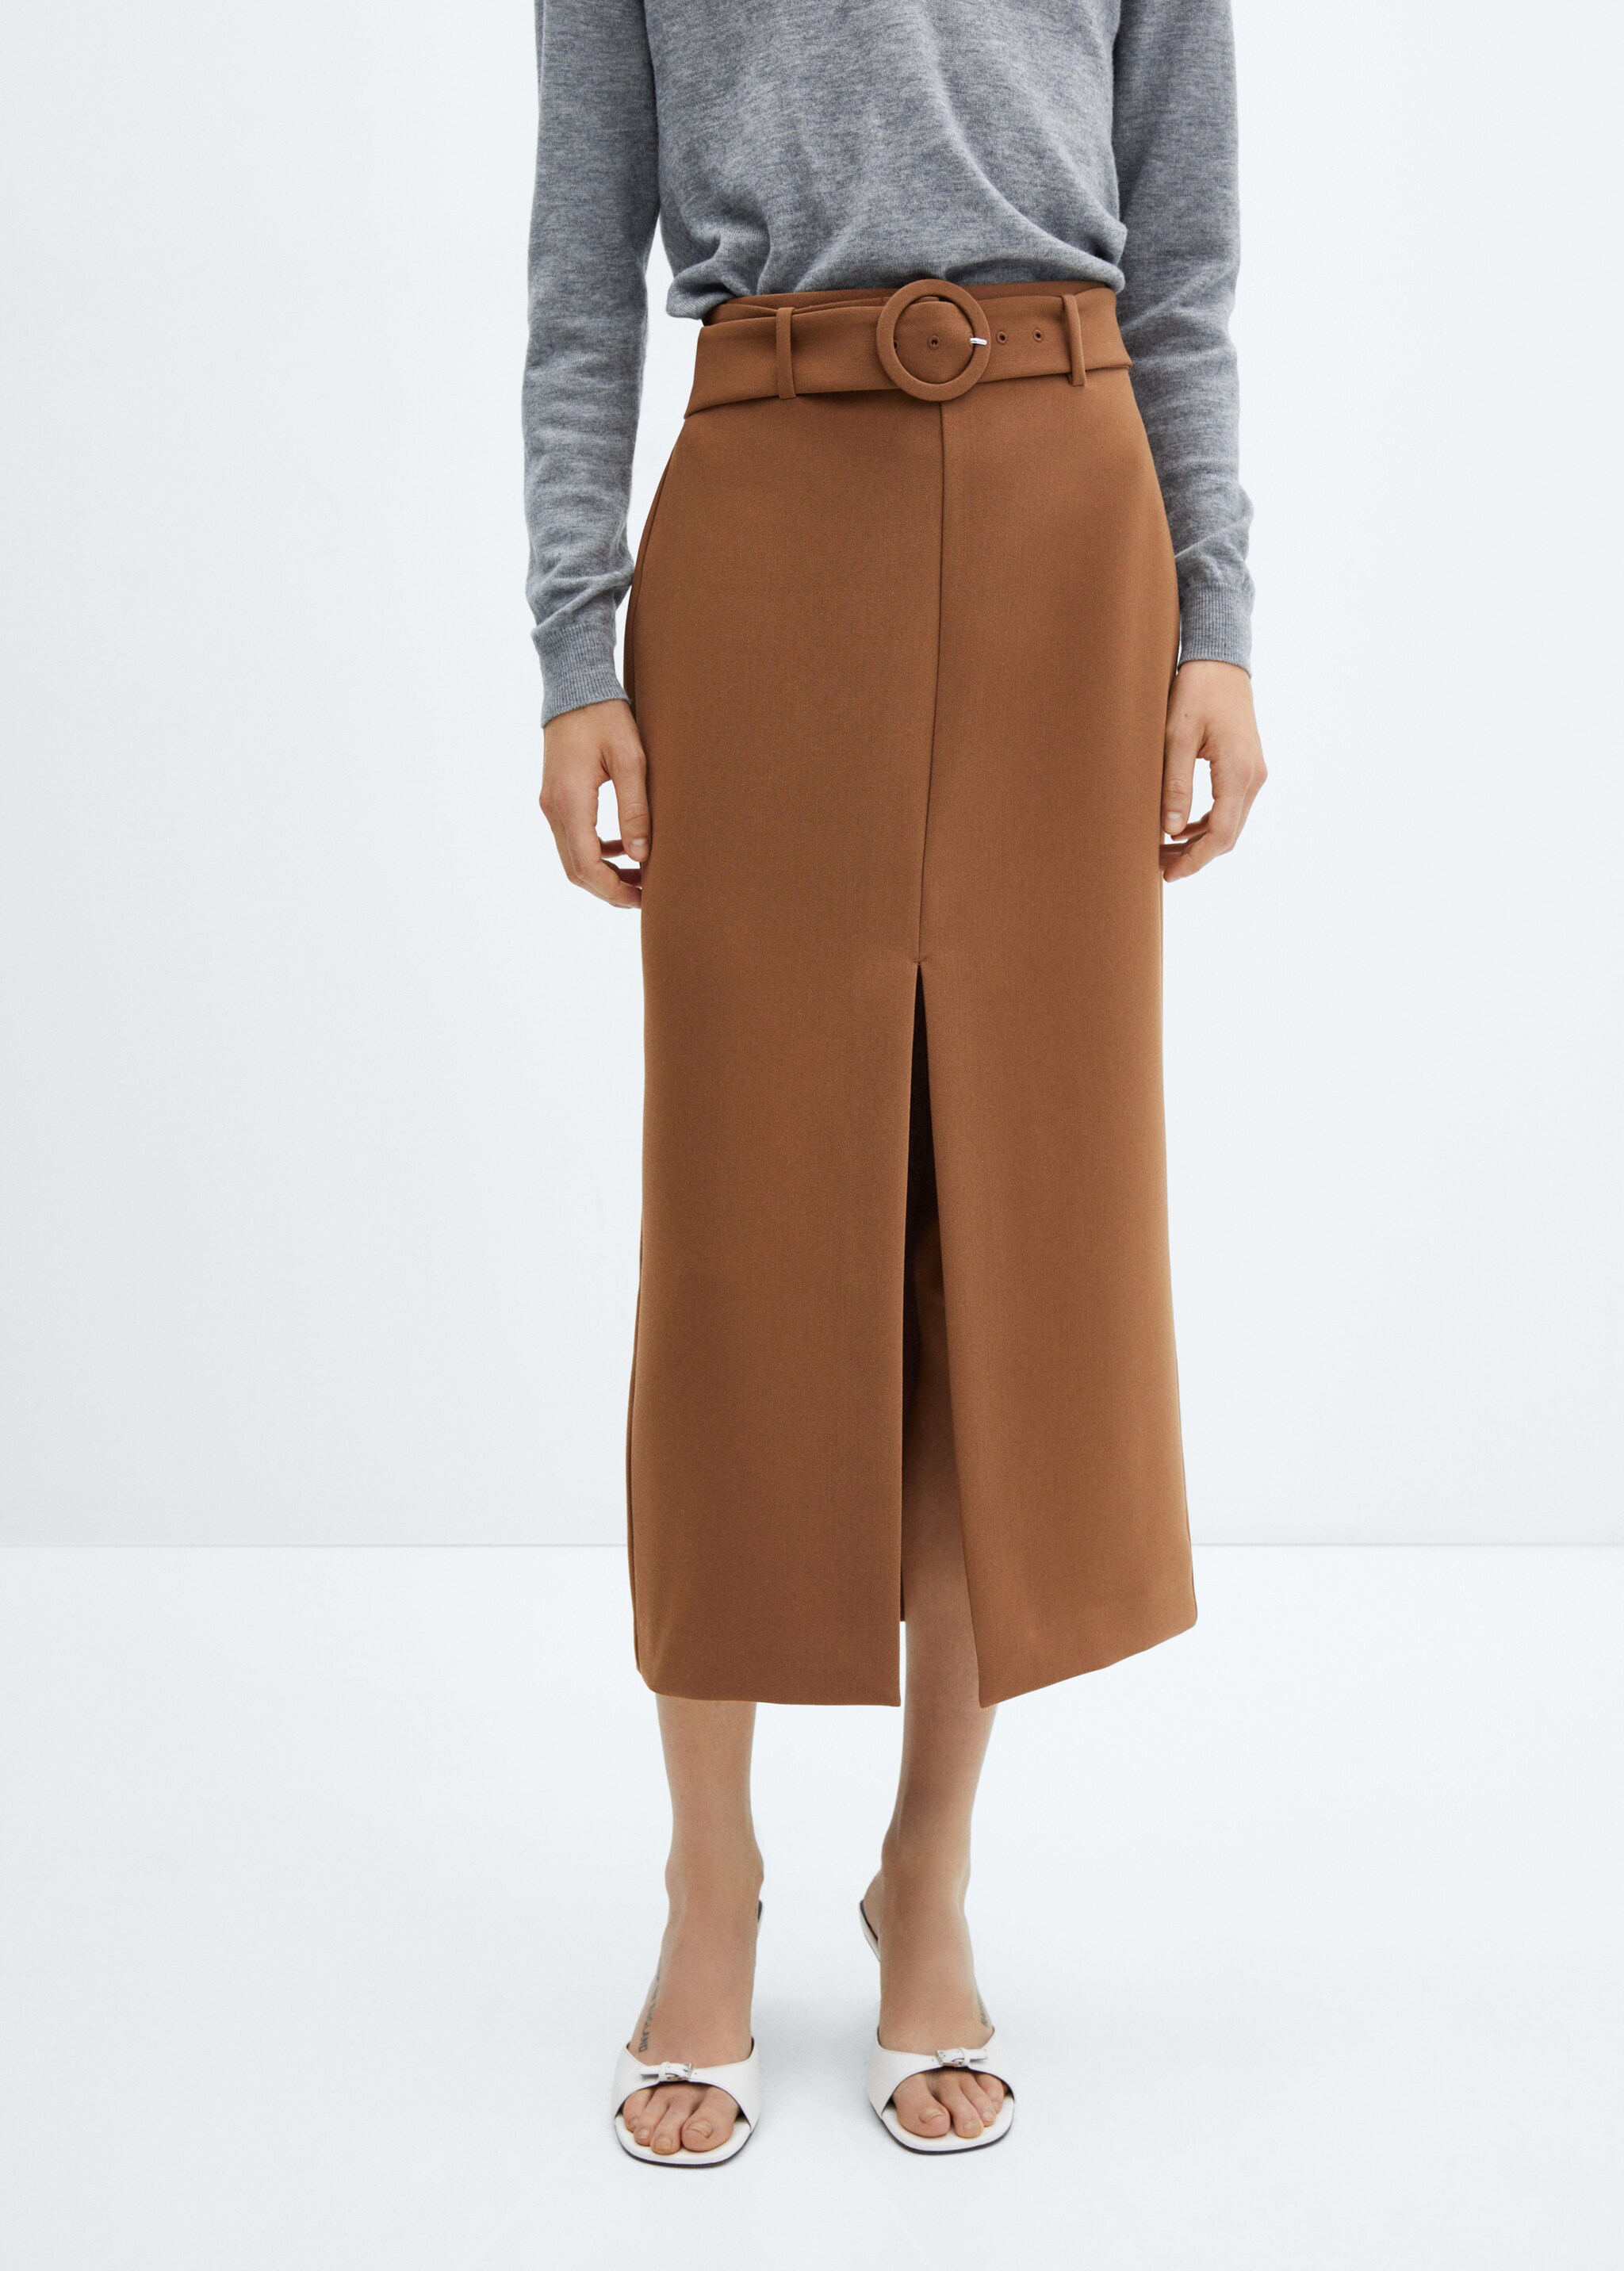 Skirt with slit and belt - Plan mediu